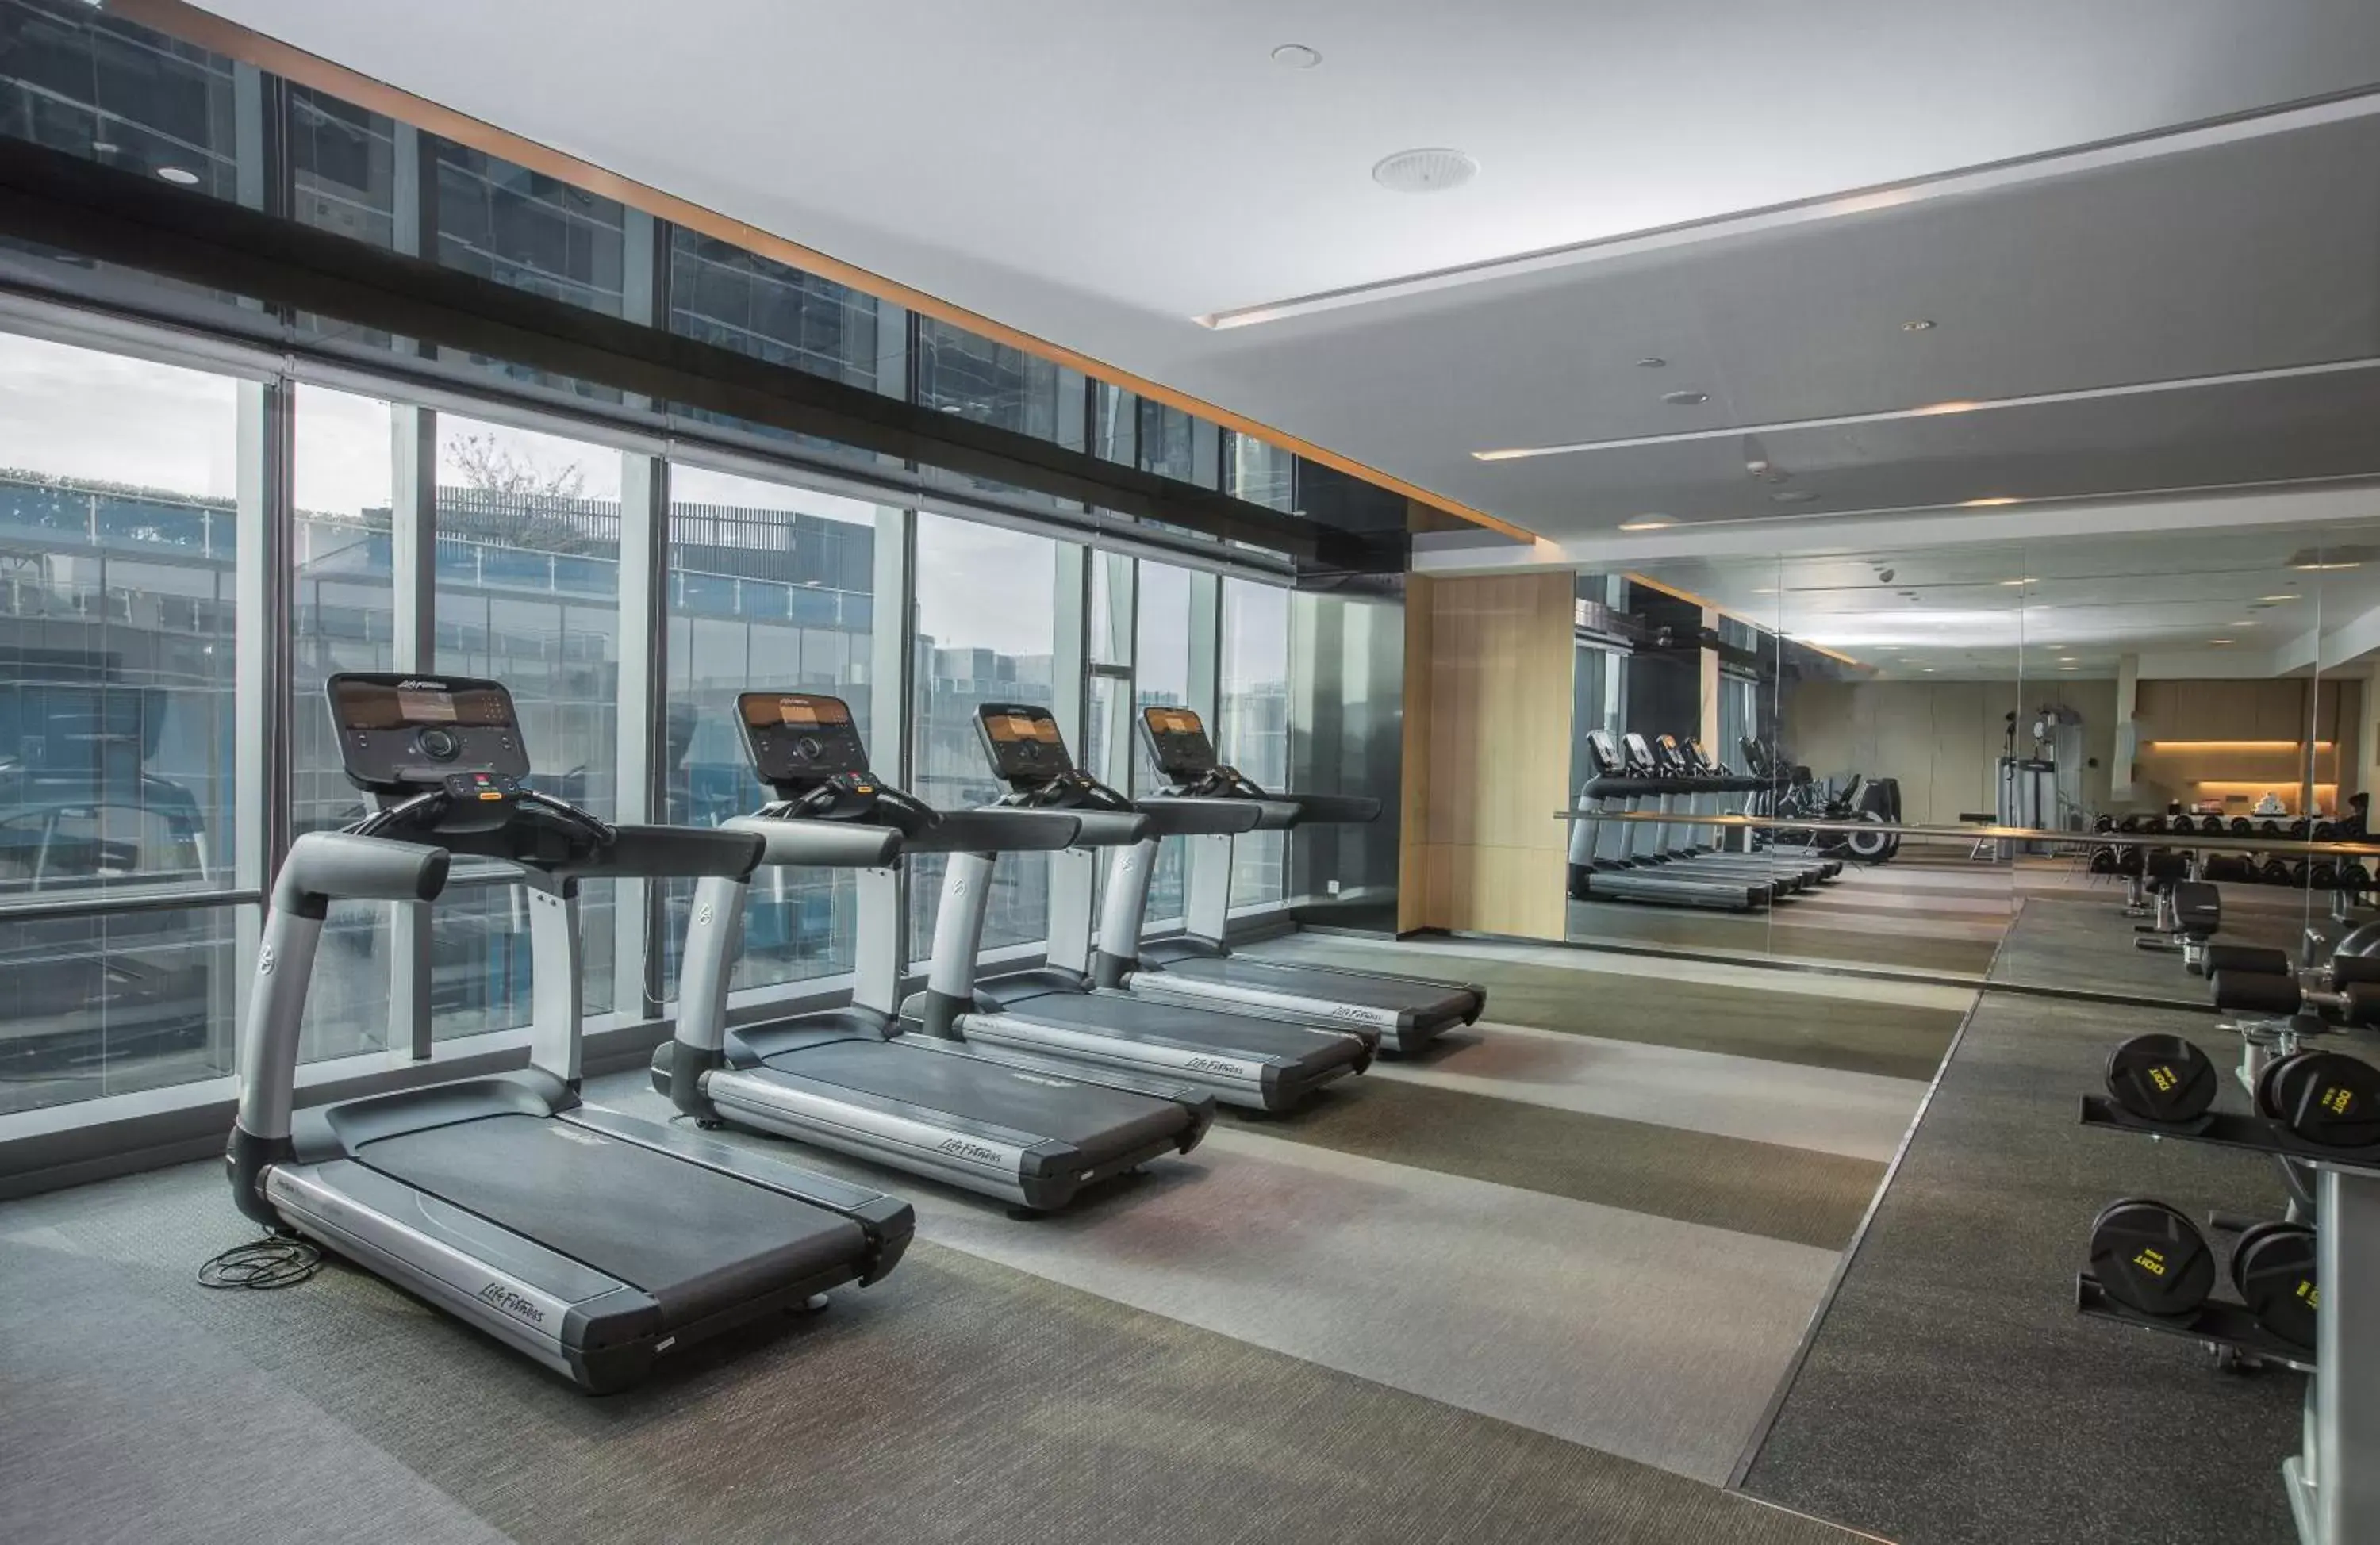 Fitness centre/facilities, Fitness Center/Facilities in Hyatt House Shanghai Hongqiao CBD